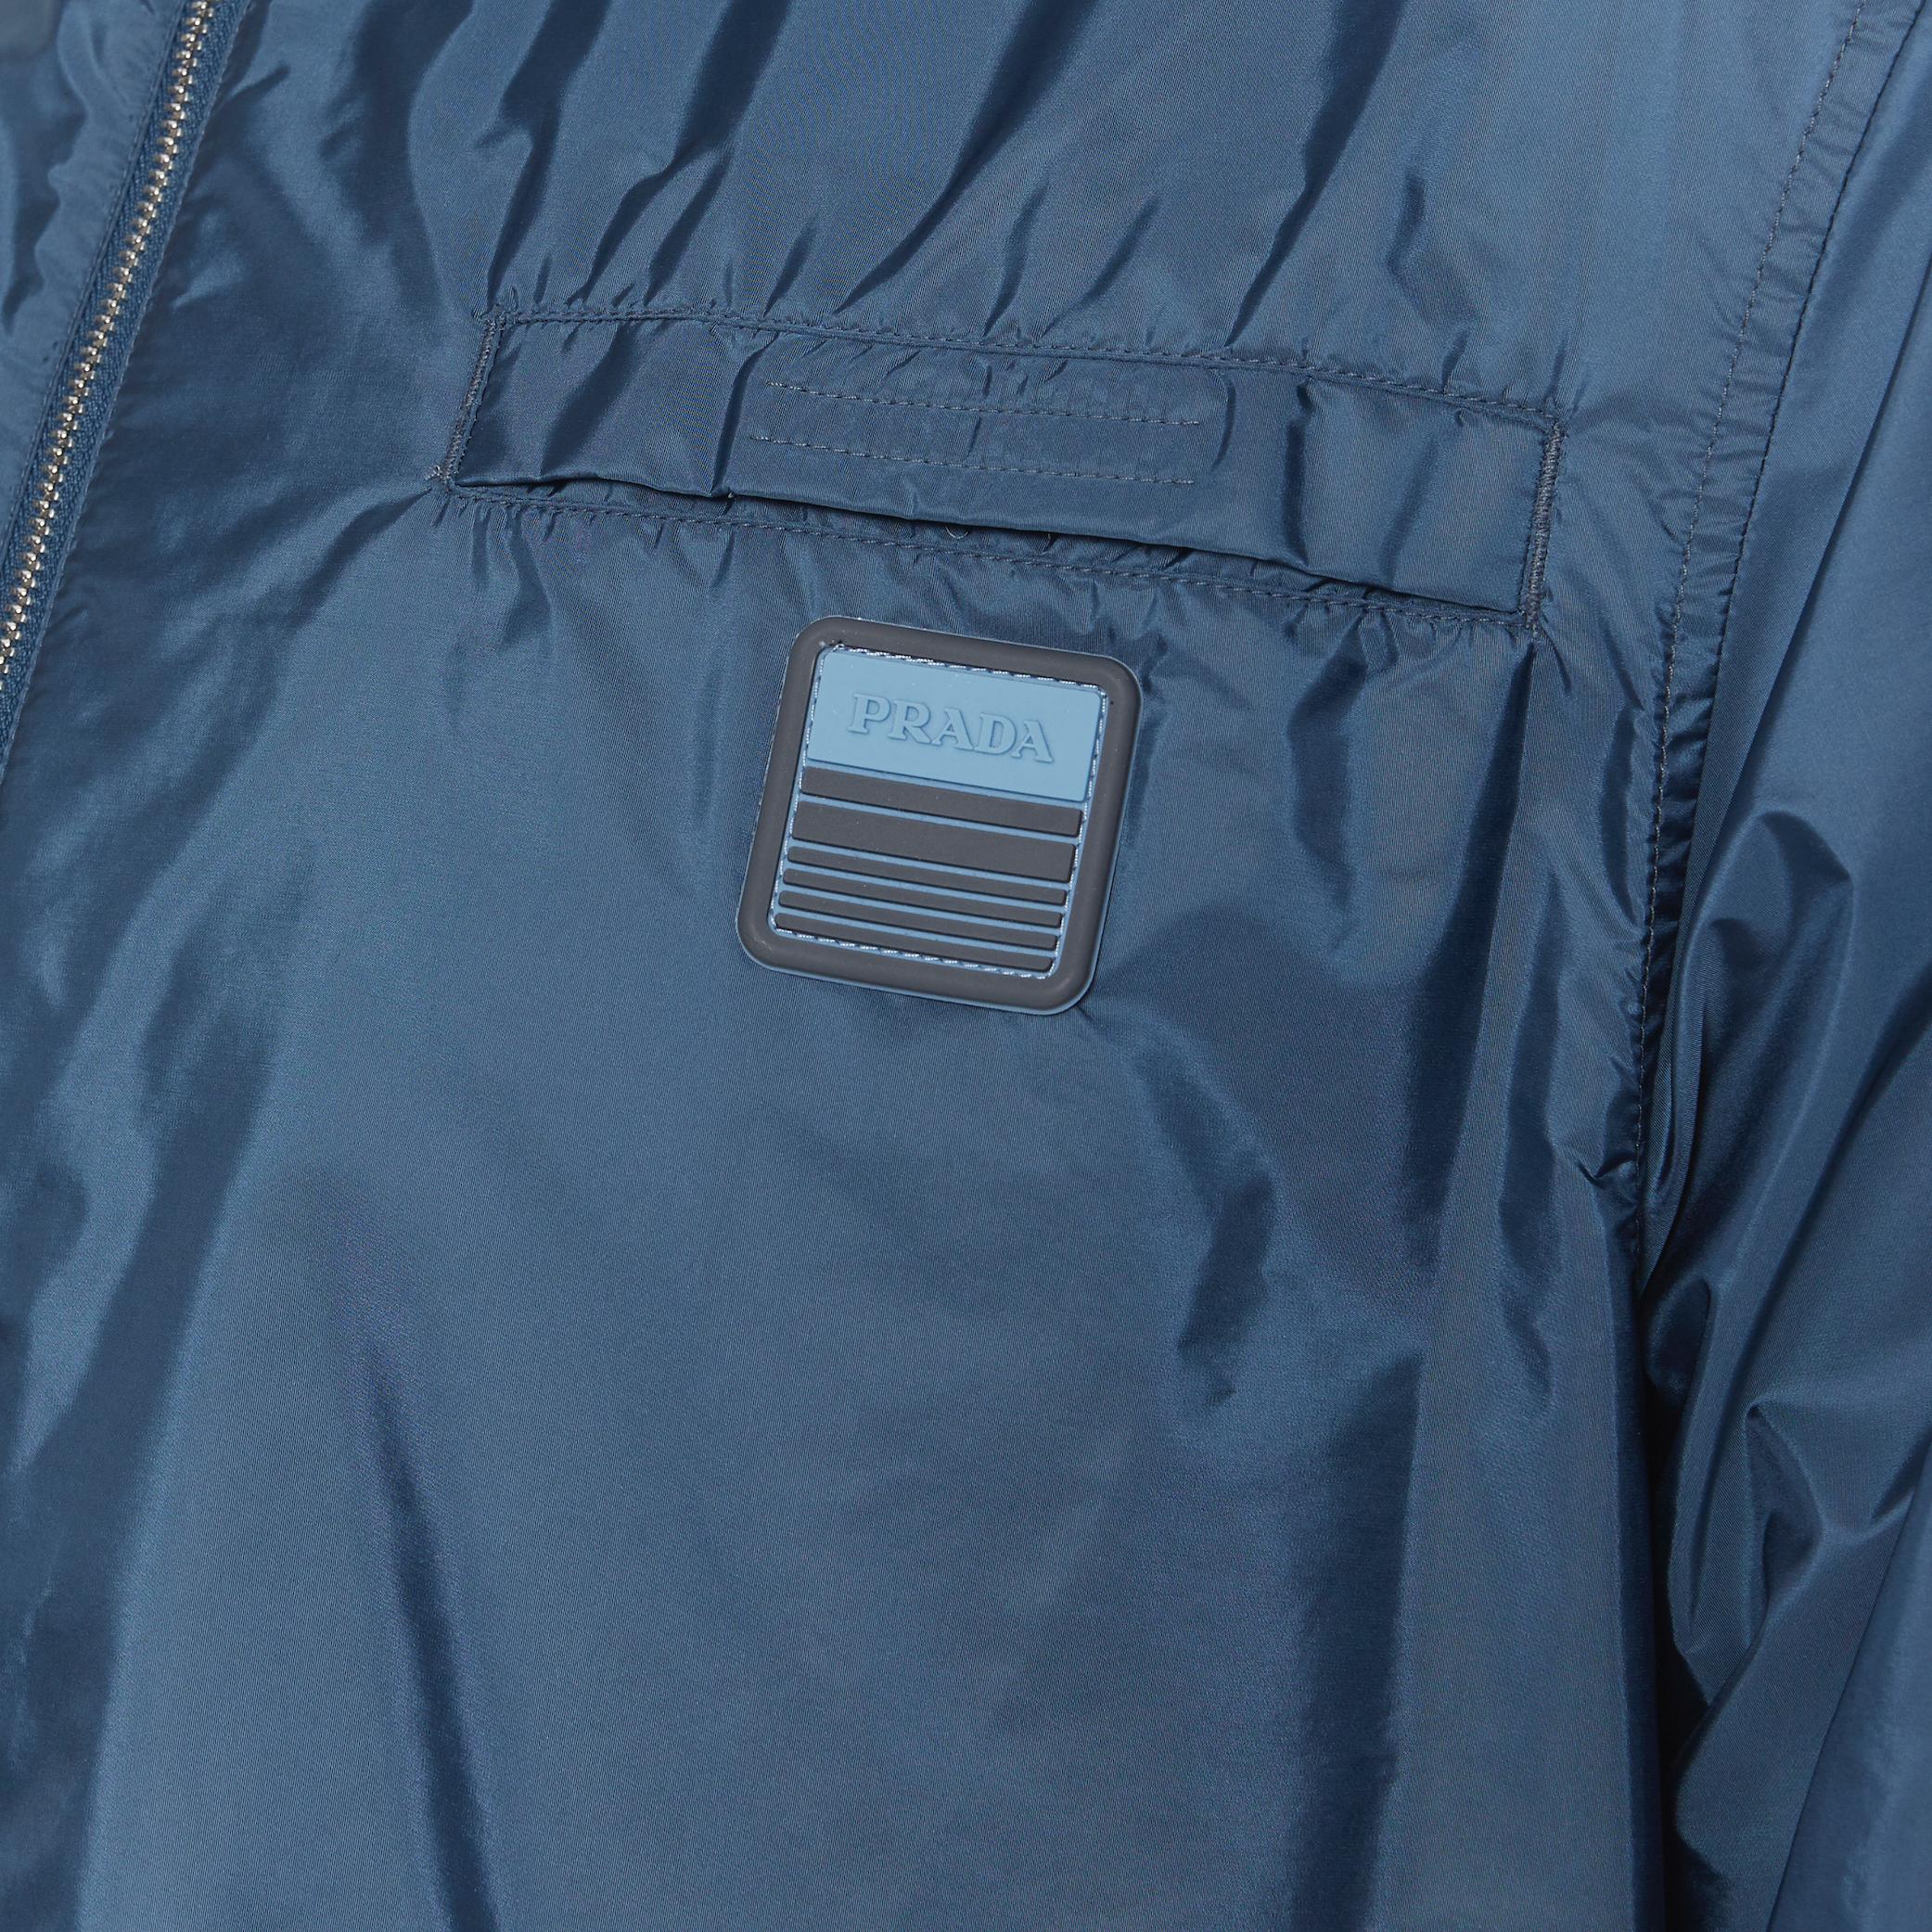 new PRADA Nylon 2018 blue sport rubber logo badge zip front shirt shell jacket M Reference: TGAS/A05714 Brand: Prada Designer: Miuccia Prada Collection: 2018 Material: Nylon Color: Blue Pattern: Solid Closure: Zip Extra Detail: Prada logo rubber